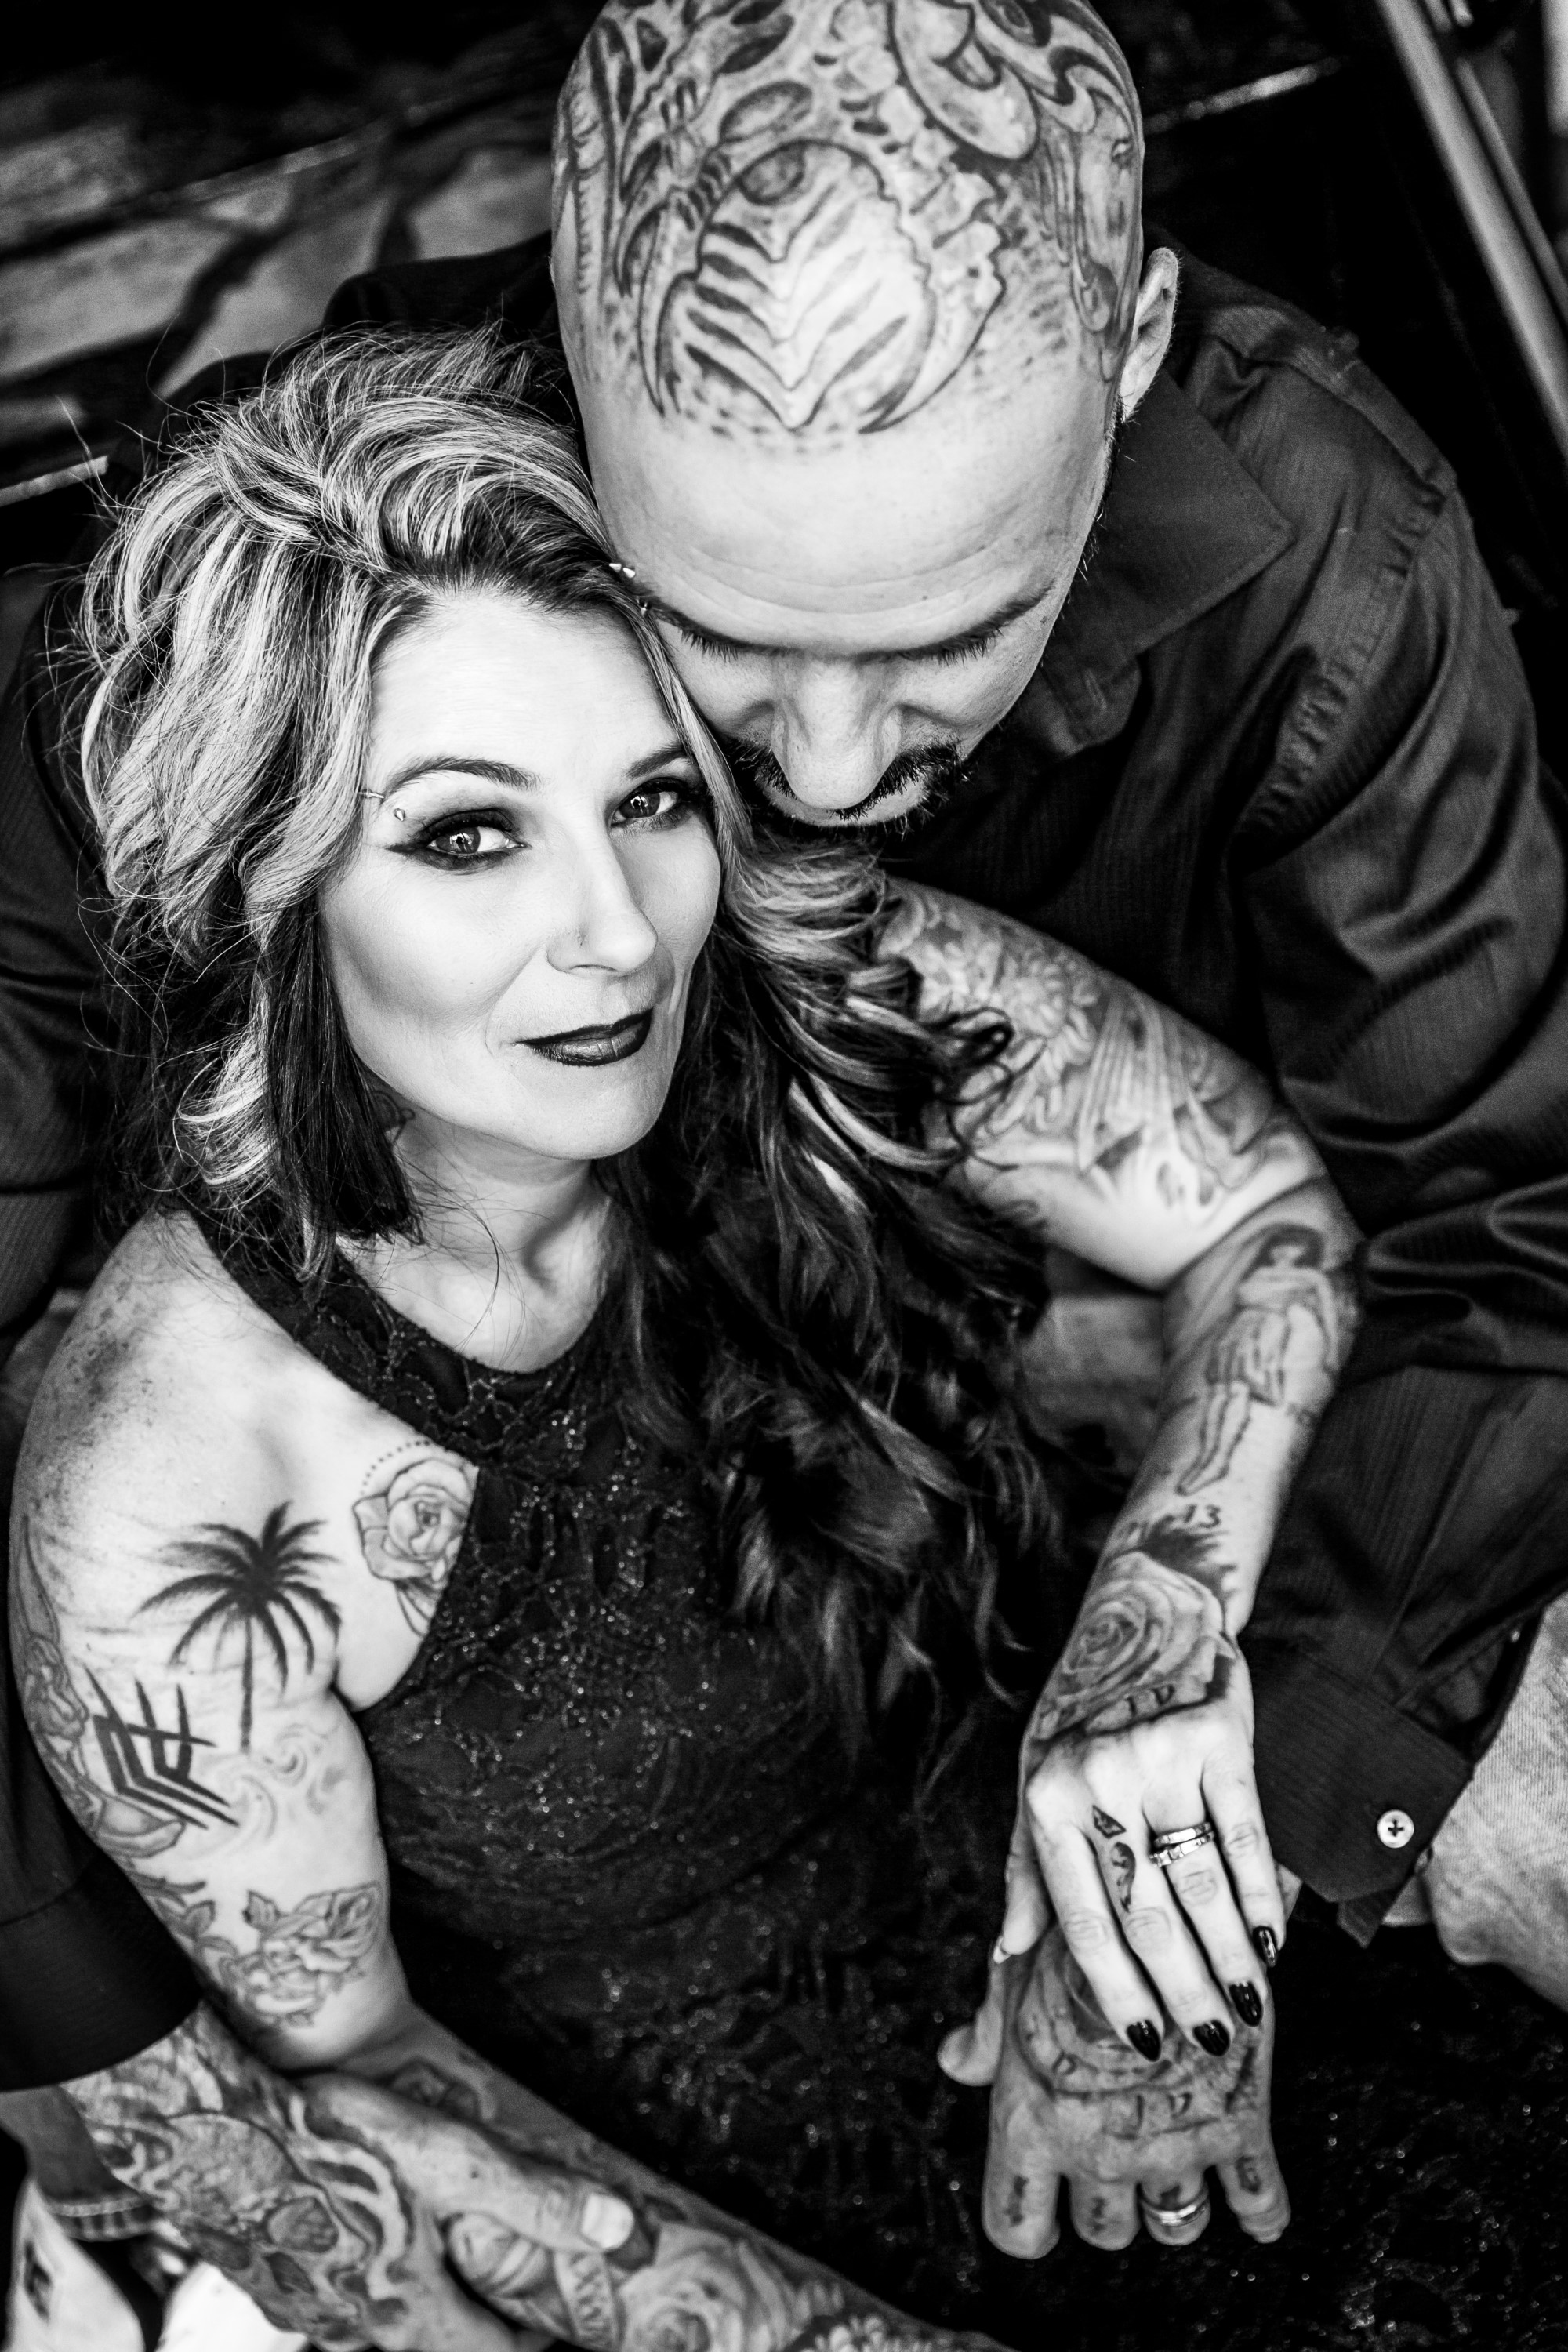 tattooed couple embracing